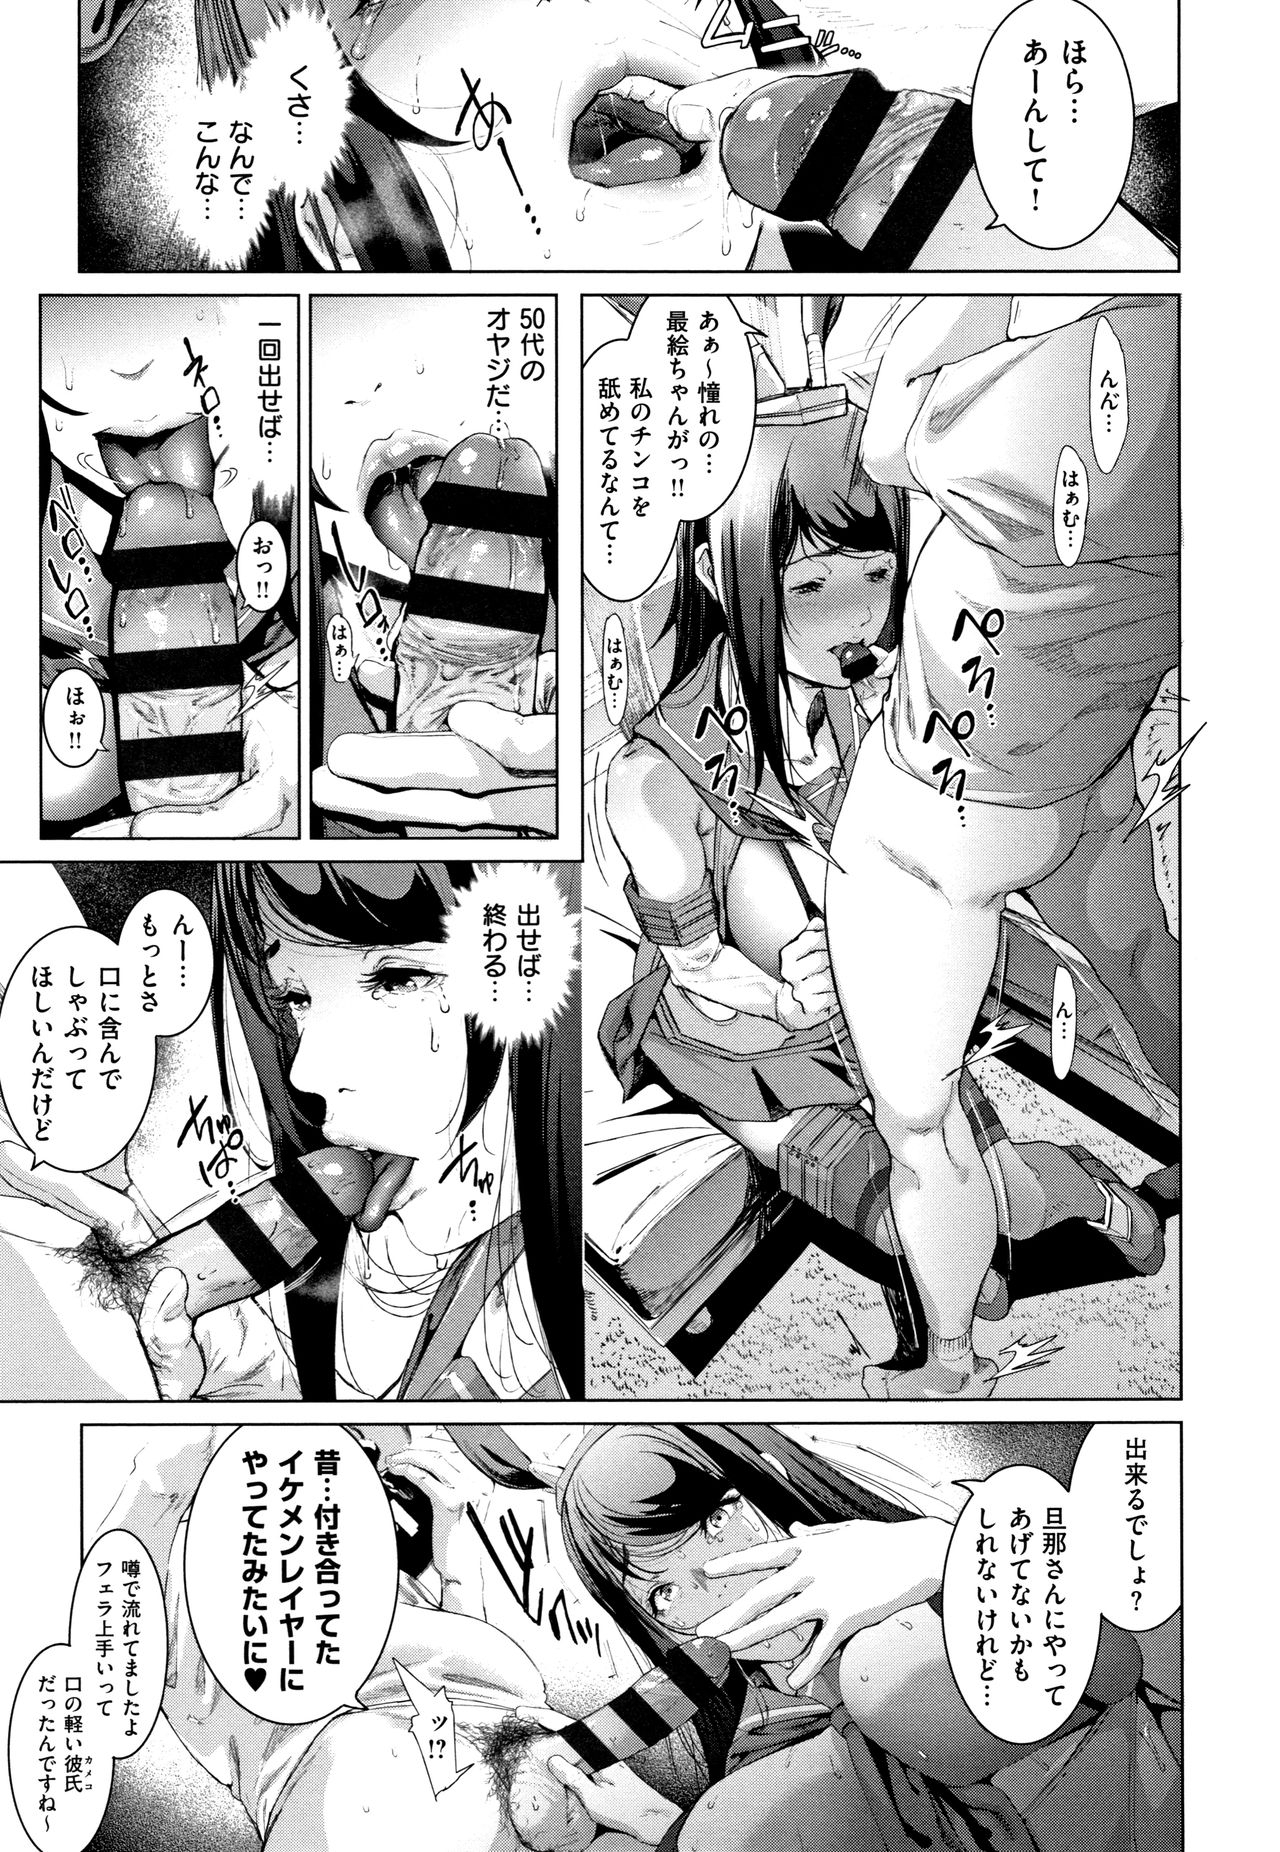 [Suzuhane Suzu] Cos wa Midara na Kamen Shogyouban - Cosplay is a mask [wakes up erotic personality...] 45